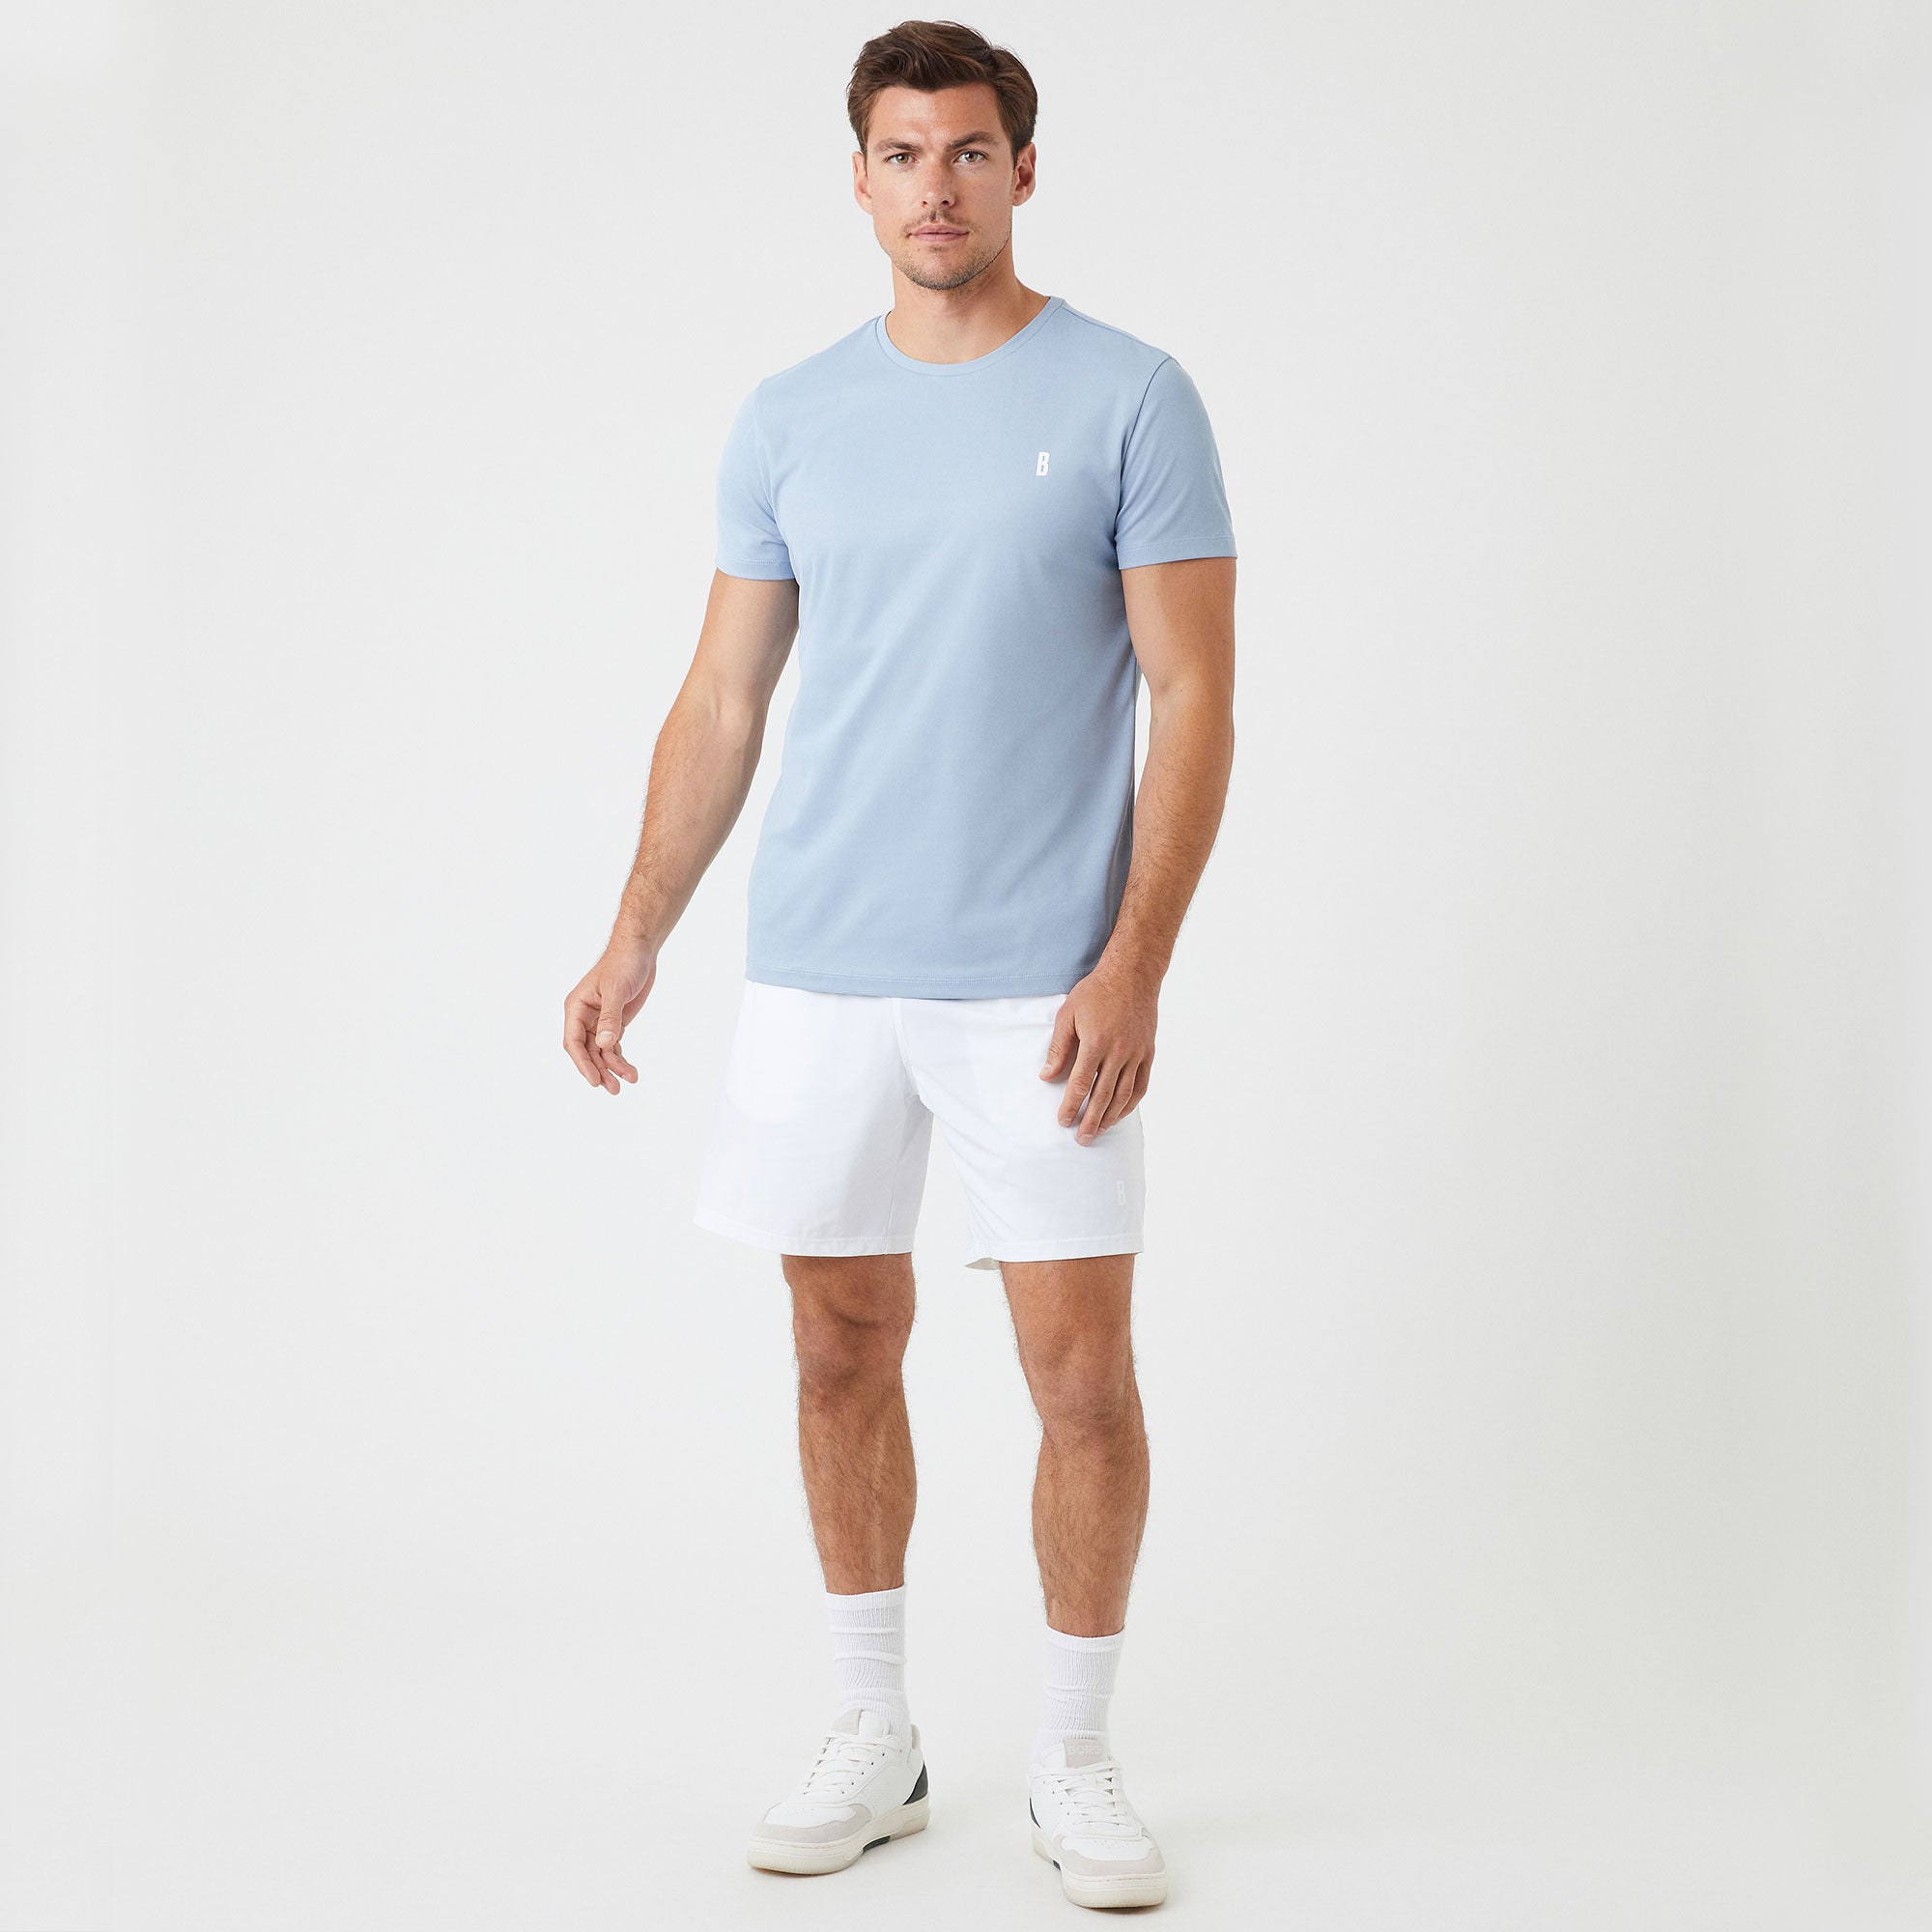 Björn Borg Ace Men's Stripe Tennis Shirt Blue (5)